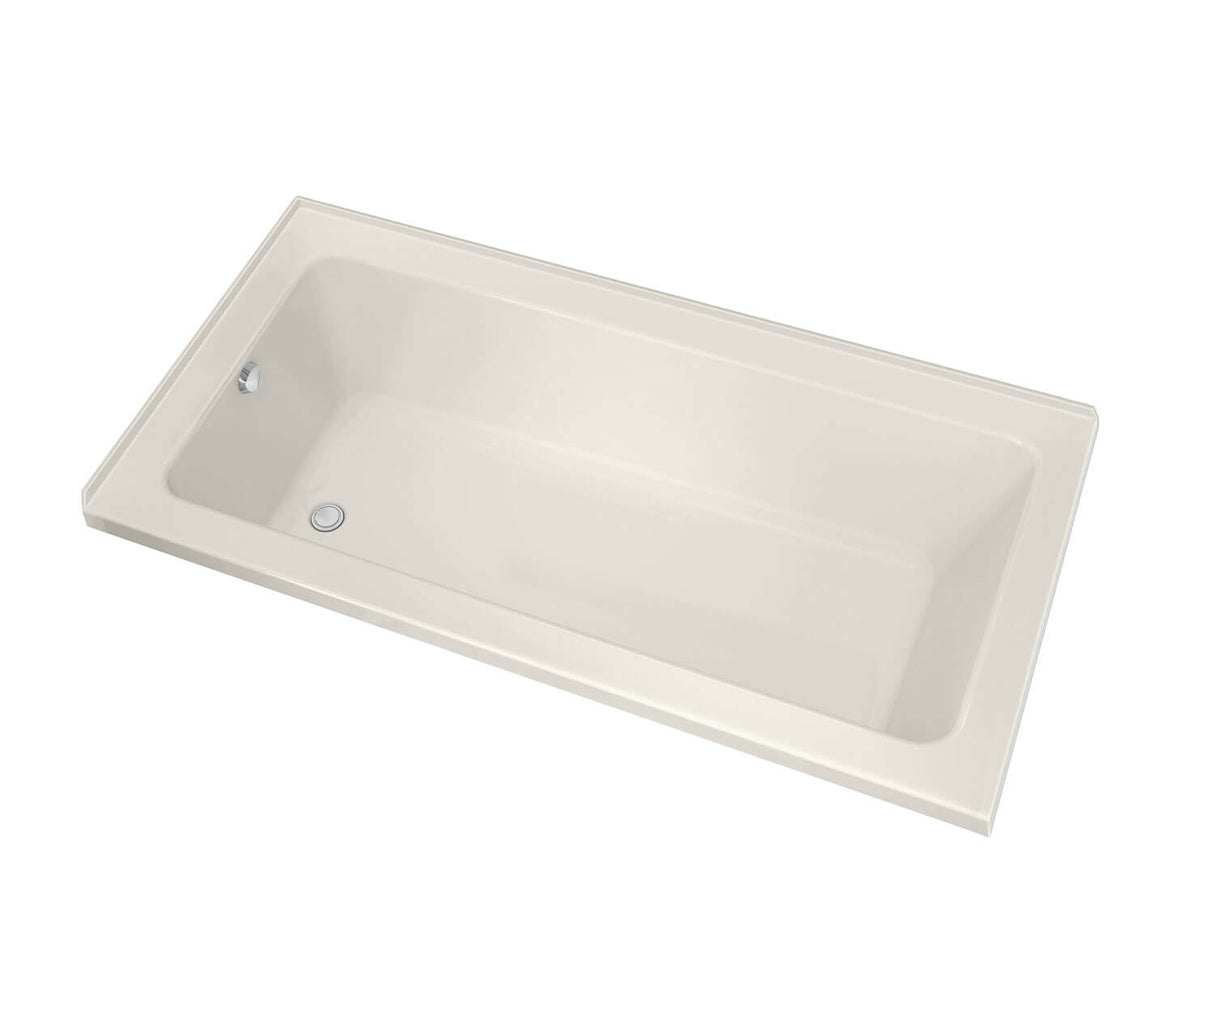 MAAX 106214-L-000-007 Pose 7242 IF Acrylic Corner Left Left-Hand Drain Bathtub in Biscuit